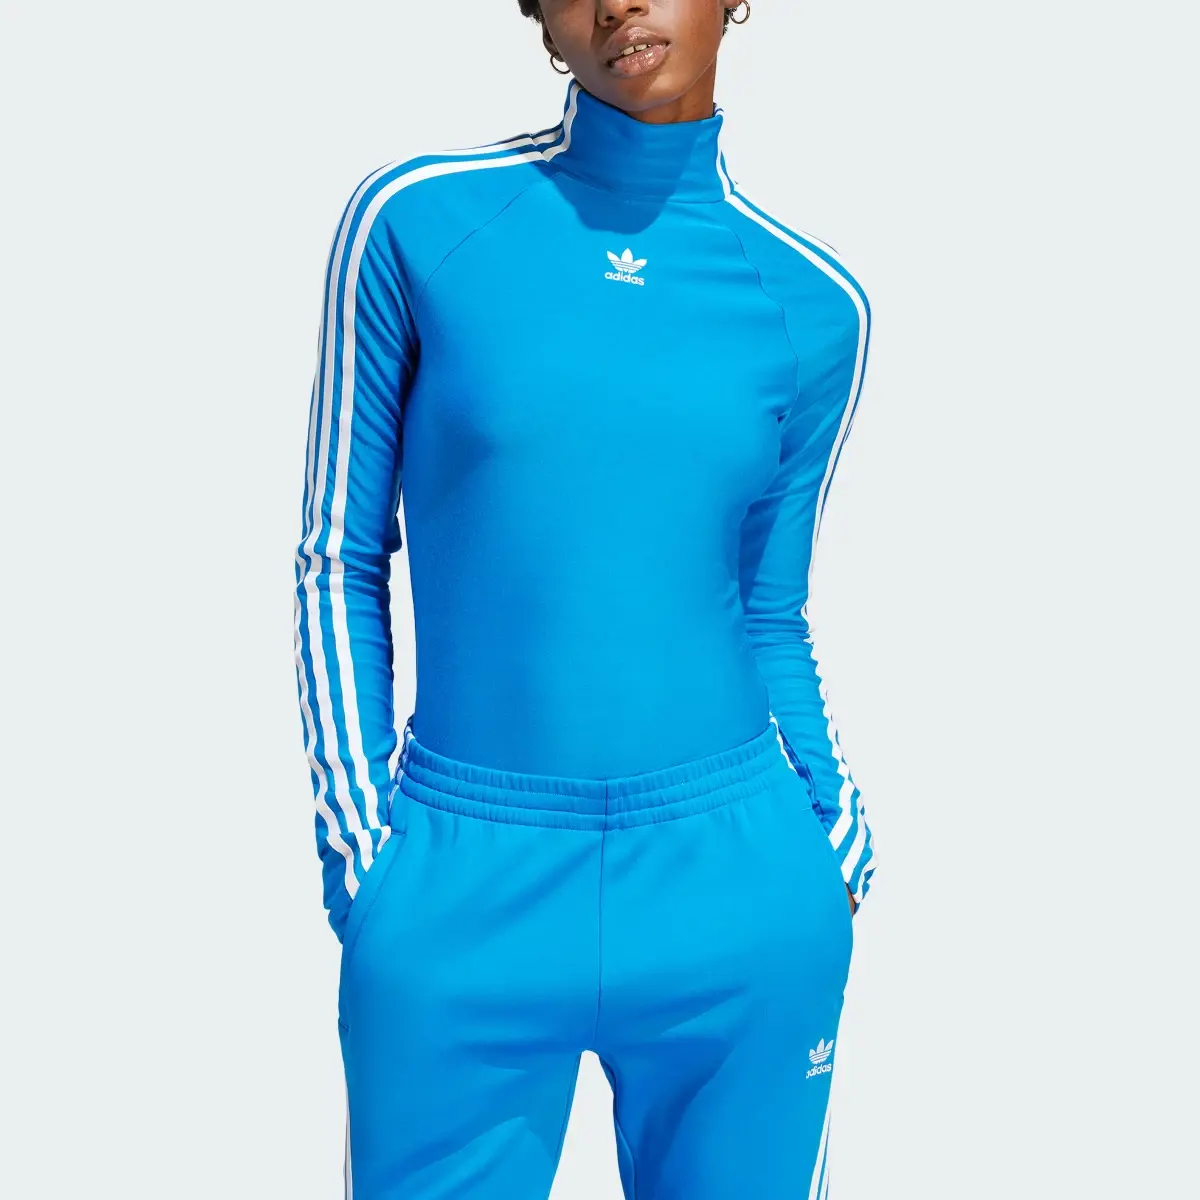 Adidas Koszulka Adilenium Tight Long Sleeve. 1